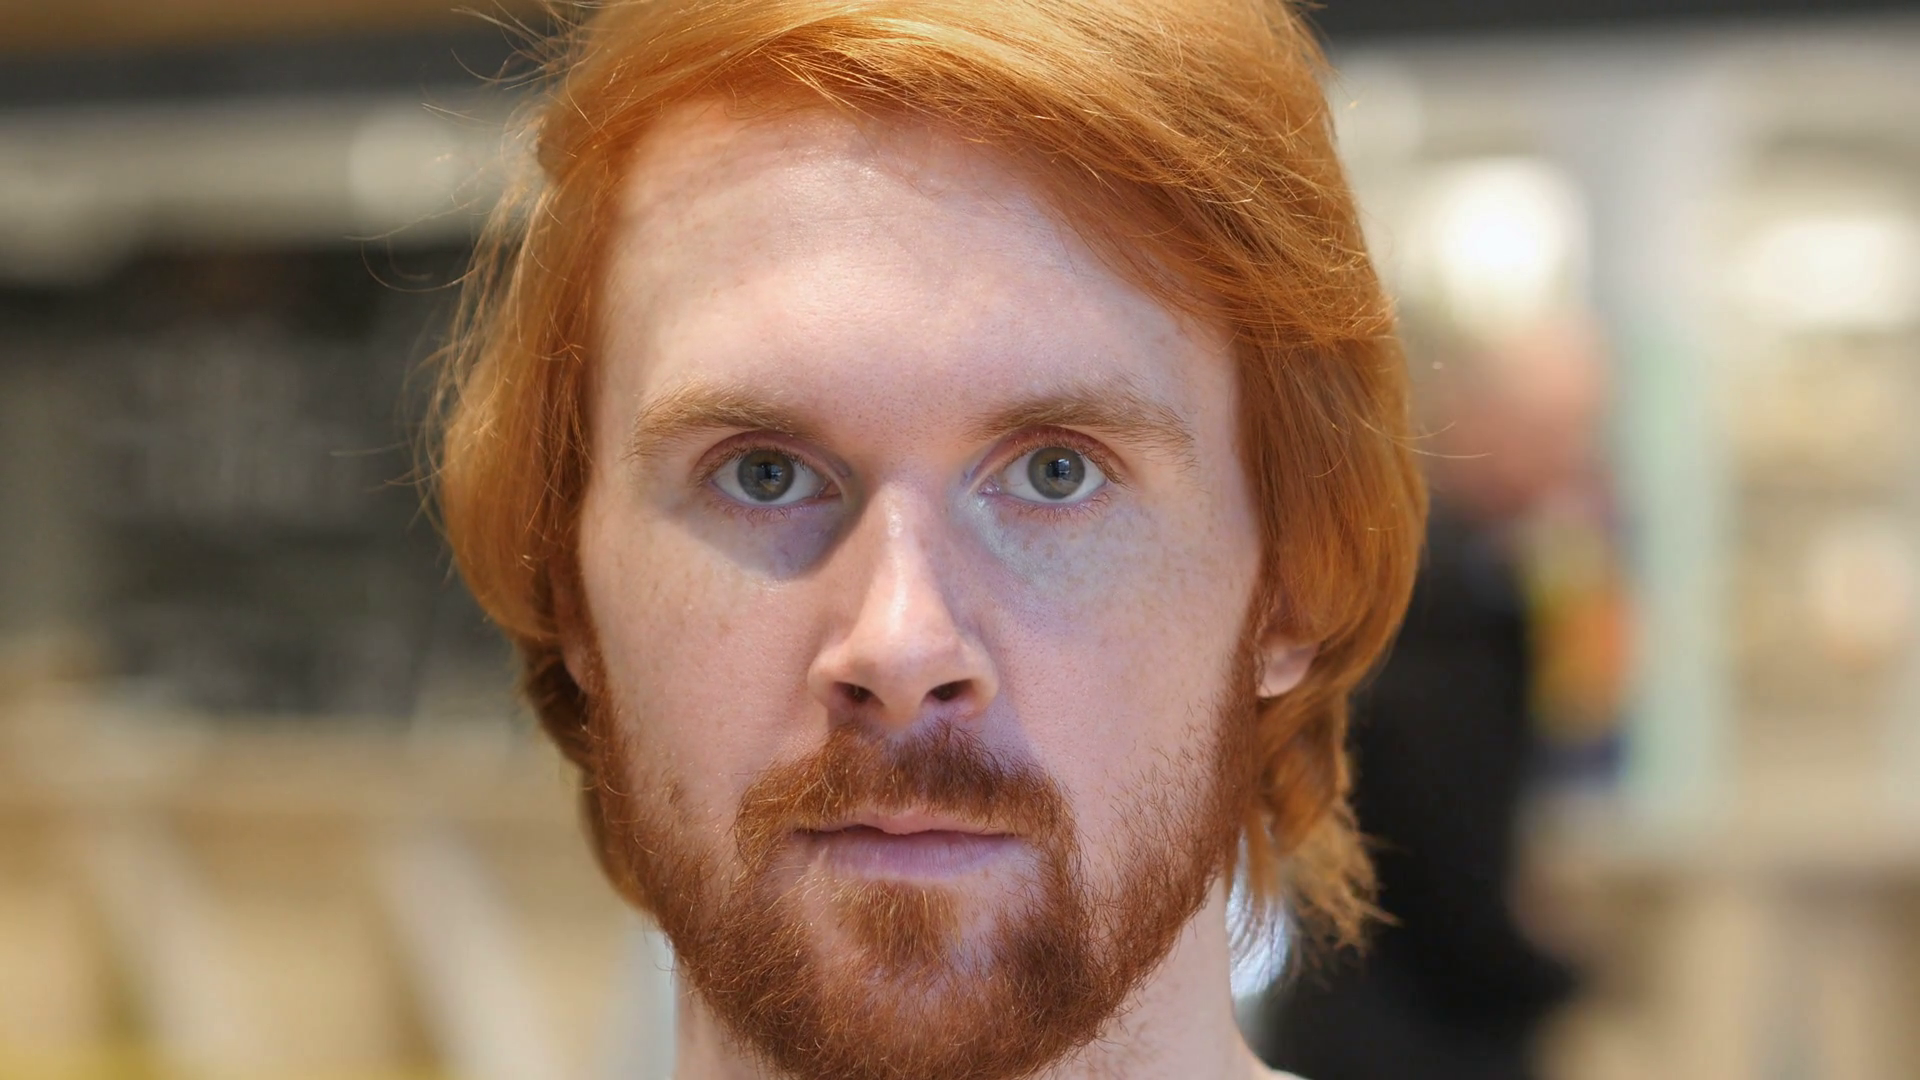 Redhead with beard